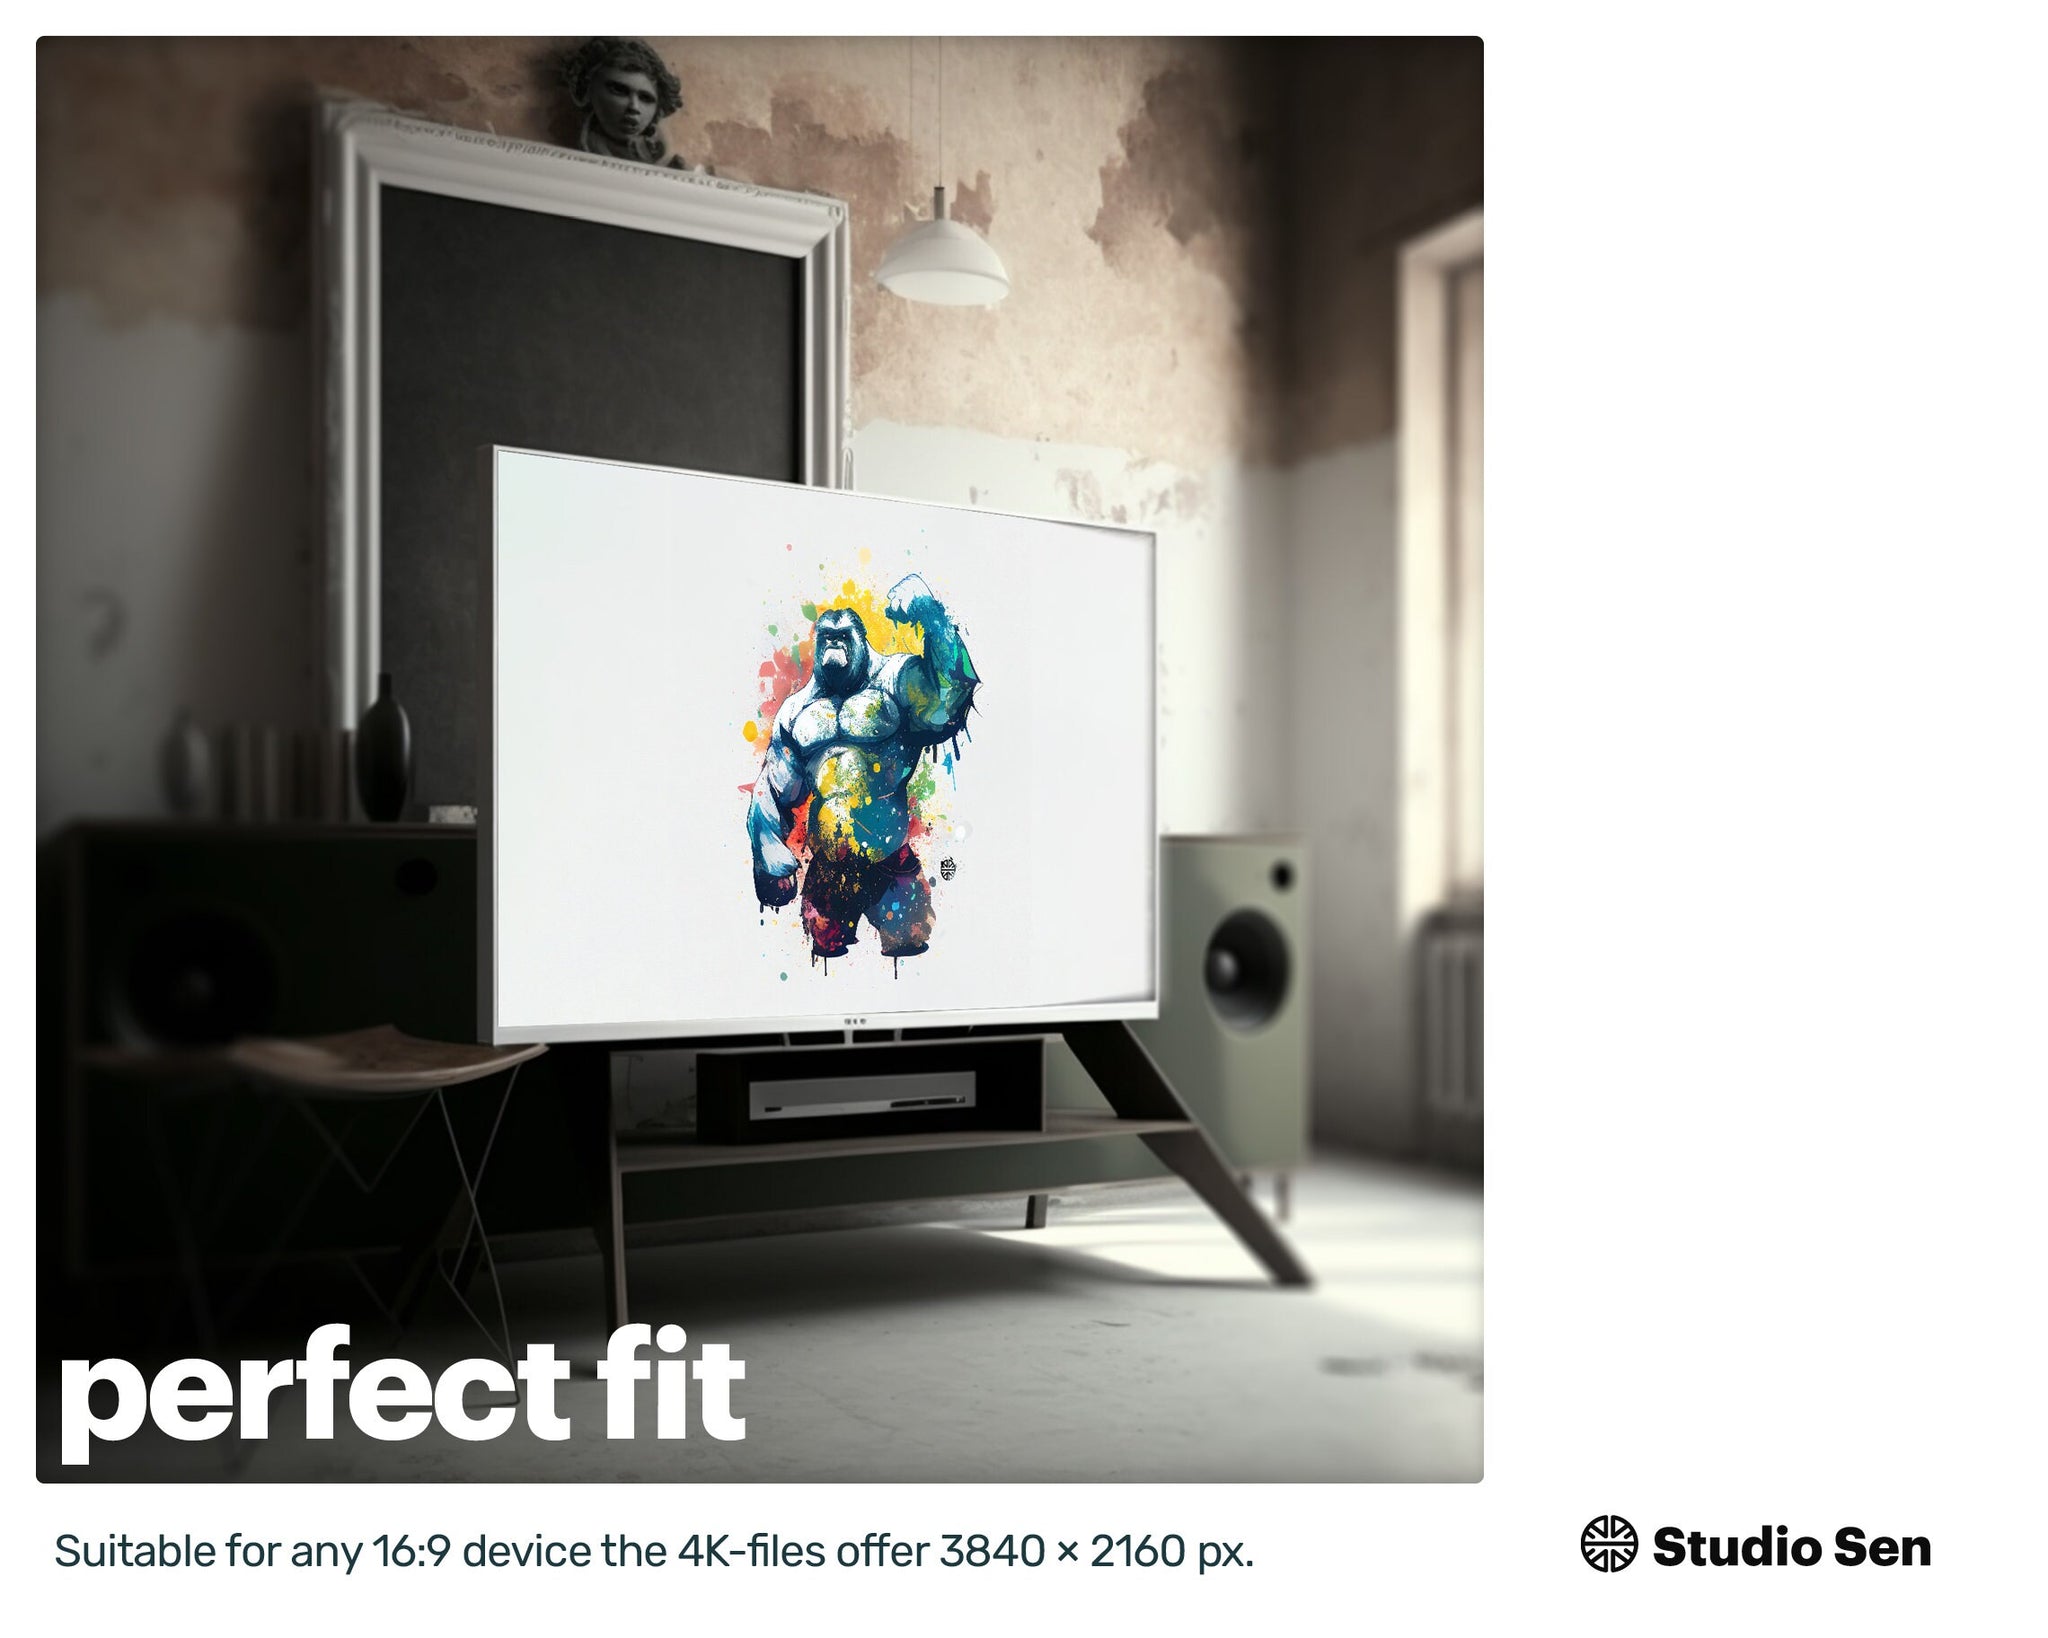 Samsung Art TV, Muscle Gorilla, premium download, drops and splashes, friendly wallpaper, art for kids